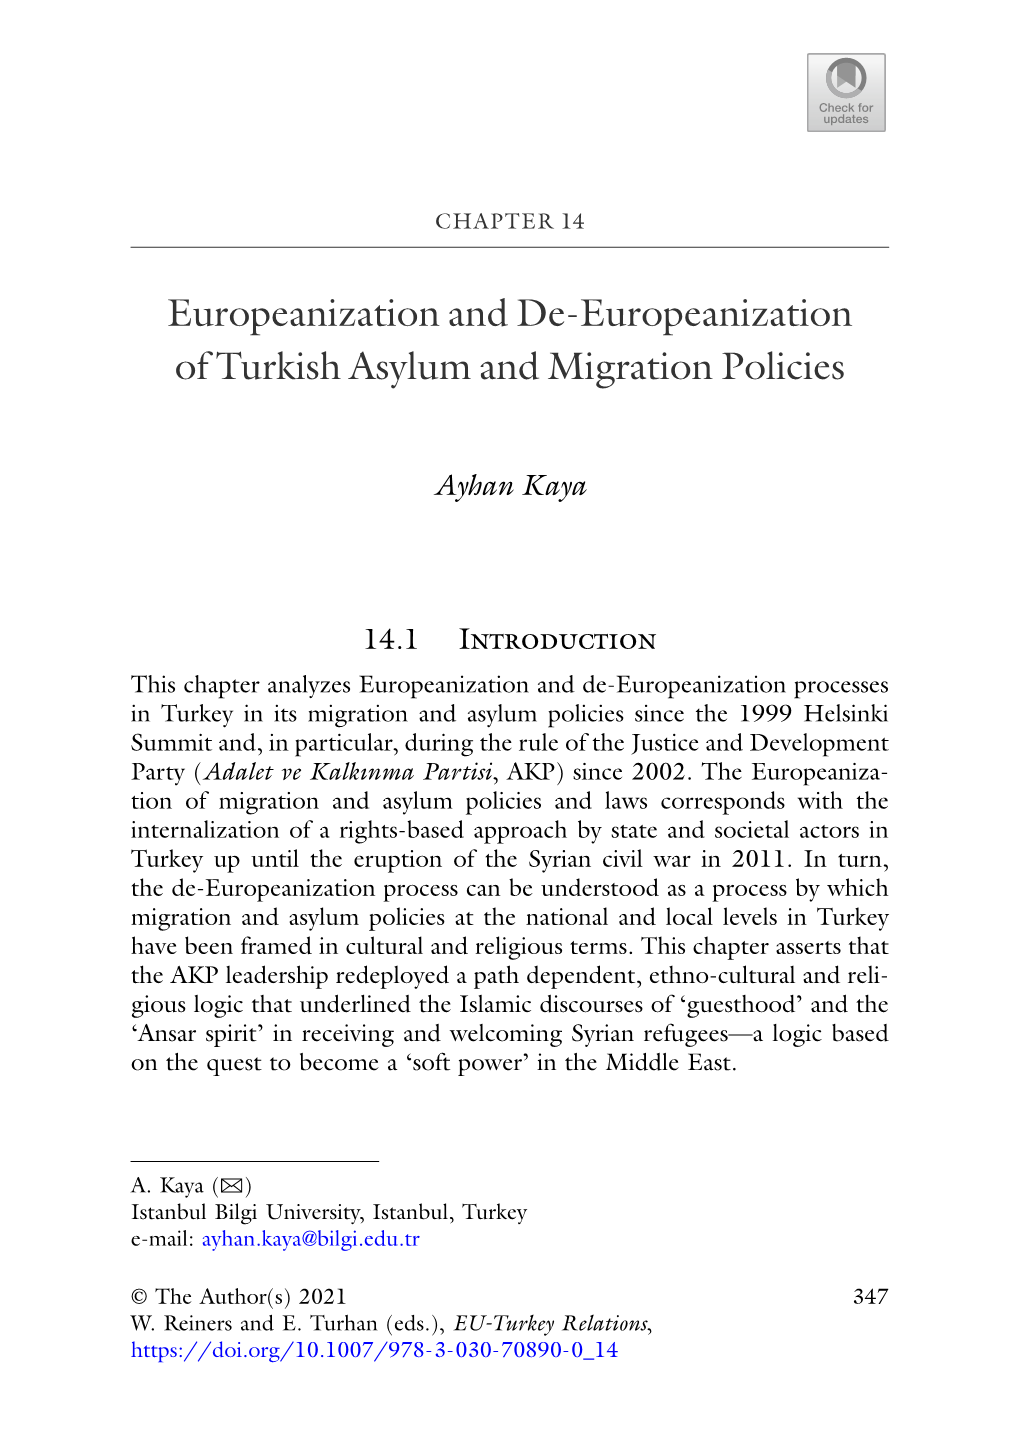 Europeanization and De-Europeanization of Turkish Asylum and Migration Policies